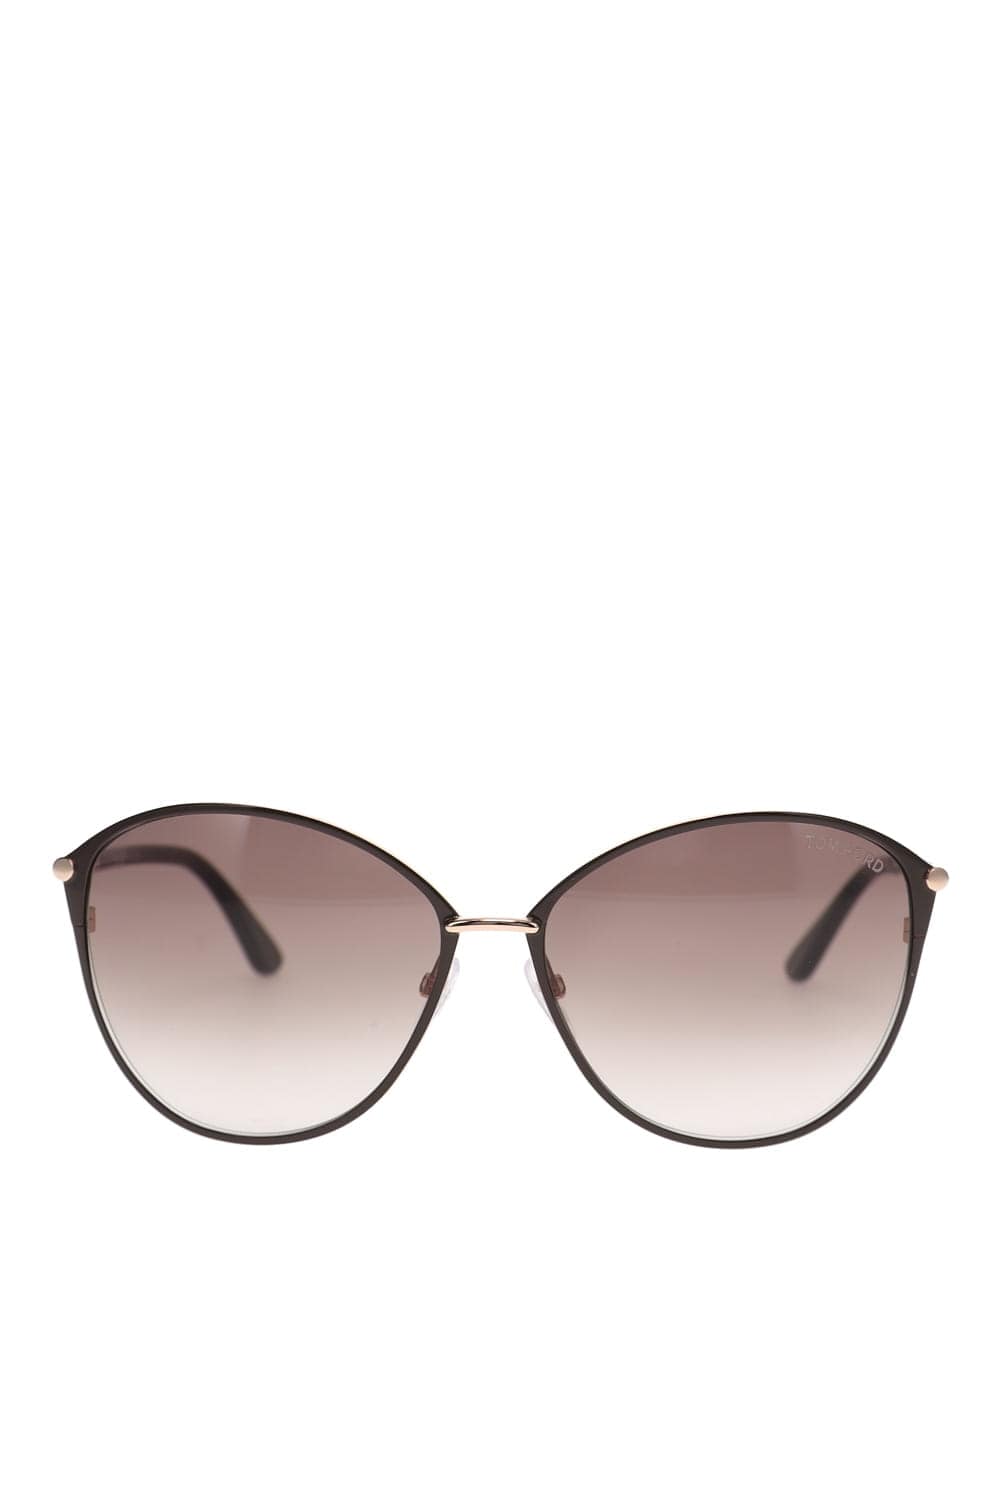 Tom Ford Eyewear FT0320 Shiny Dark Brown Sunglasses FT0320 Dark Brown Gradient